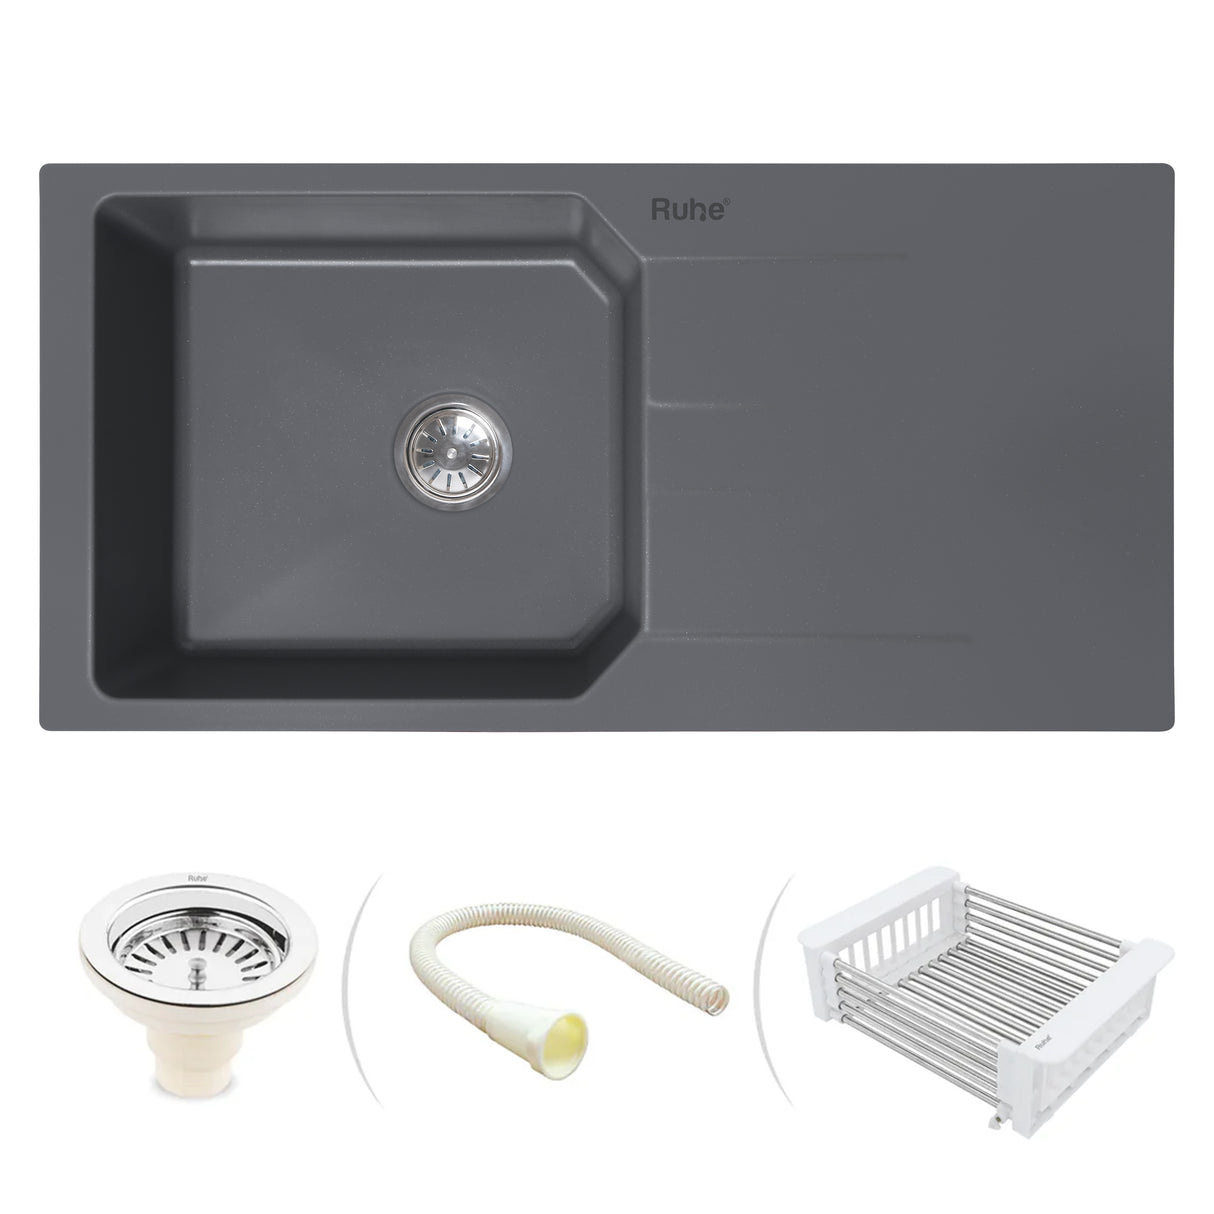 Quartz Single Bowl with Drainboard Kitchen Sink - Smoke Grey (39 x 20 x 9 inches) - by Ruhe®